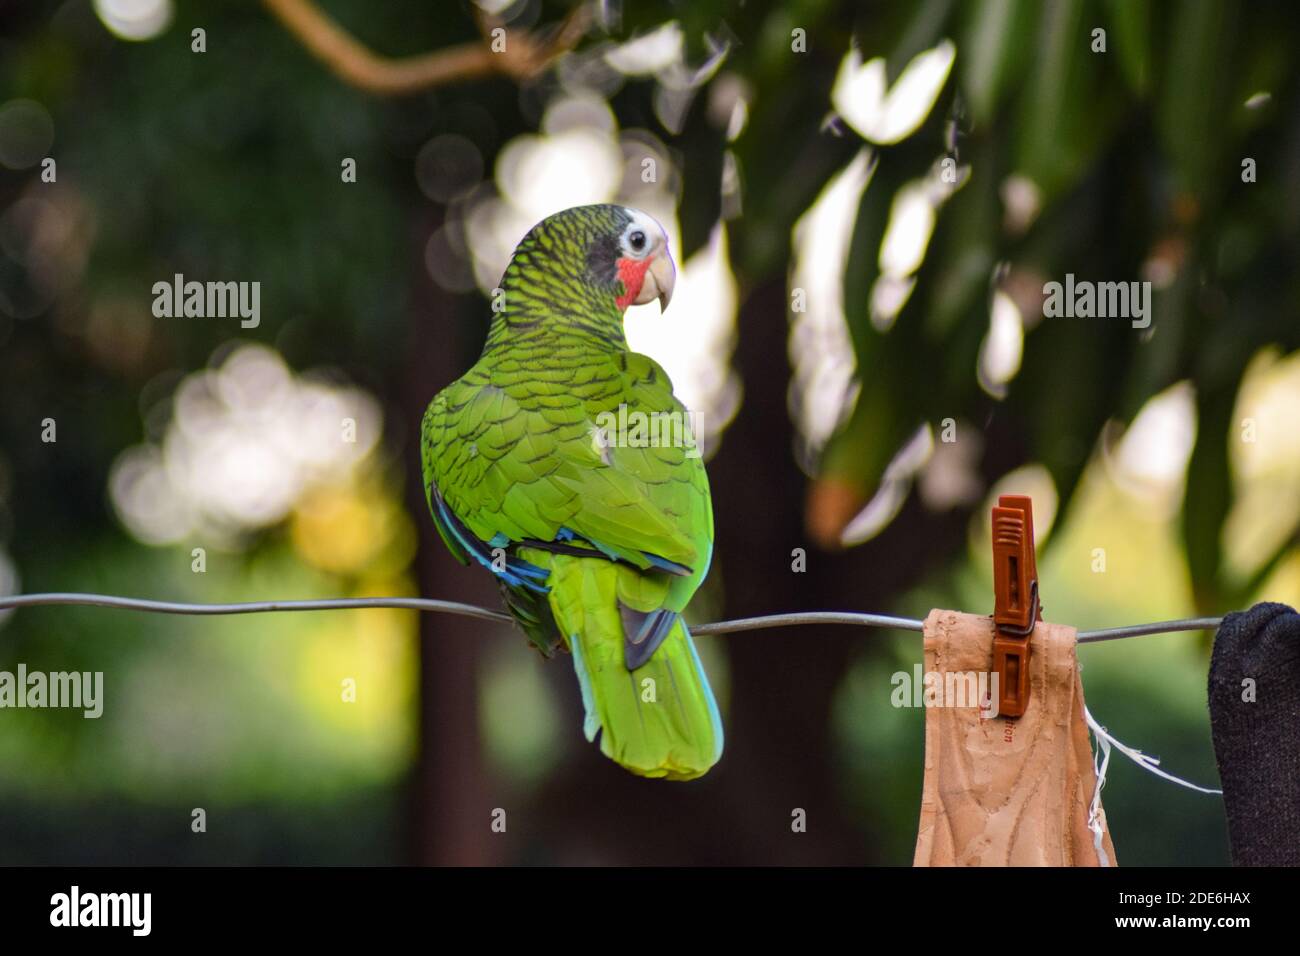 Kubanischer Amazonaspapagei (Amazona leucocephala) / Kubanischer Papagei / Rosekehlpapagei saß auf einer Wäscheleine einer Farm im Osten Kubas Stockfoto